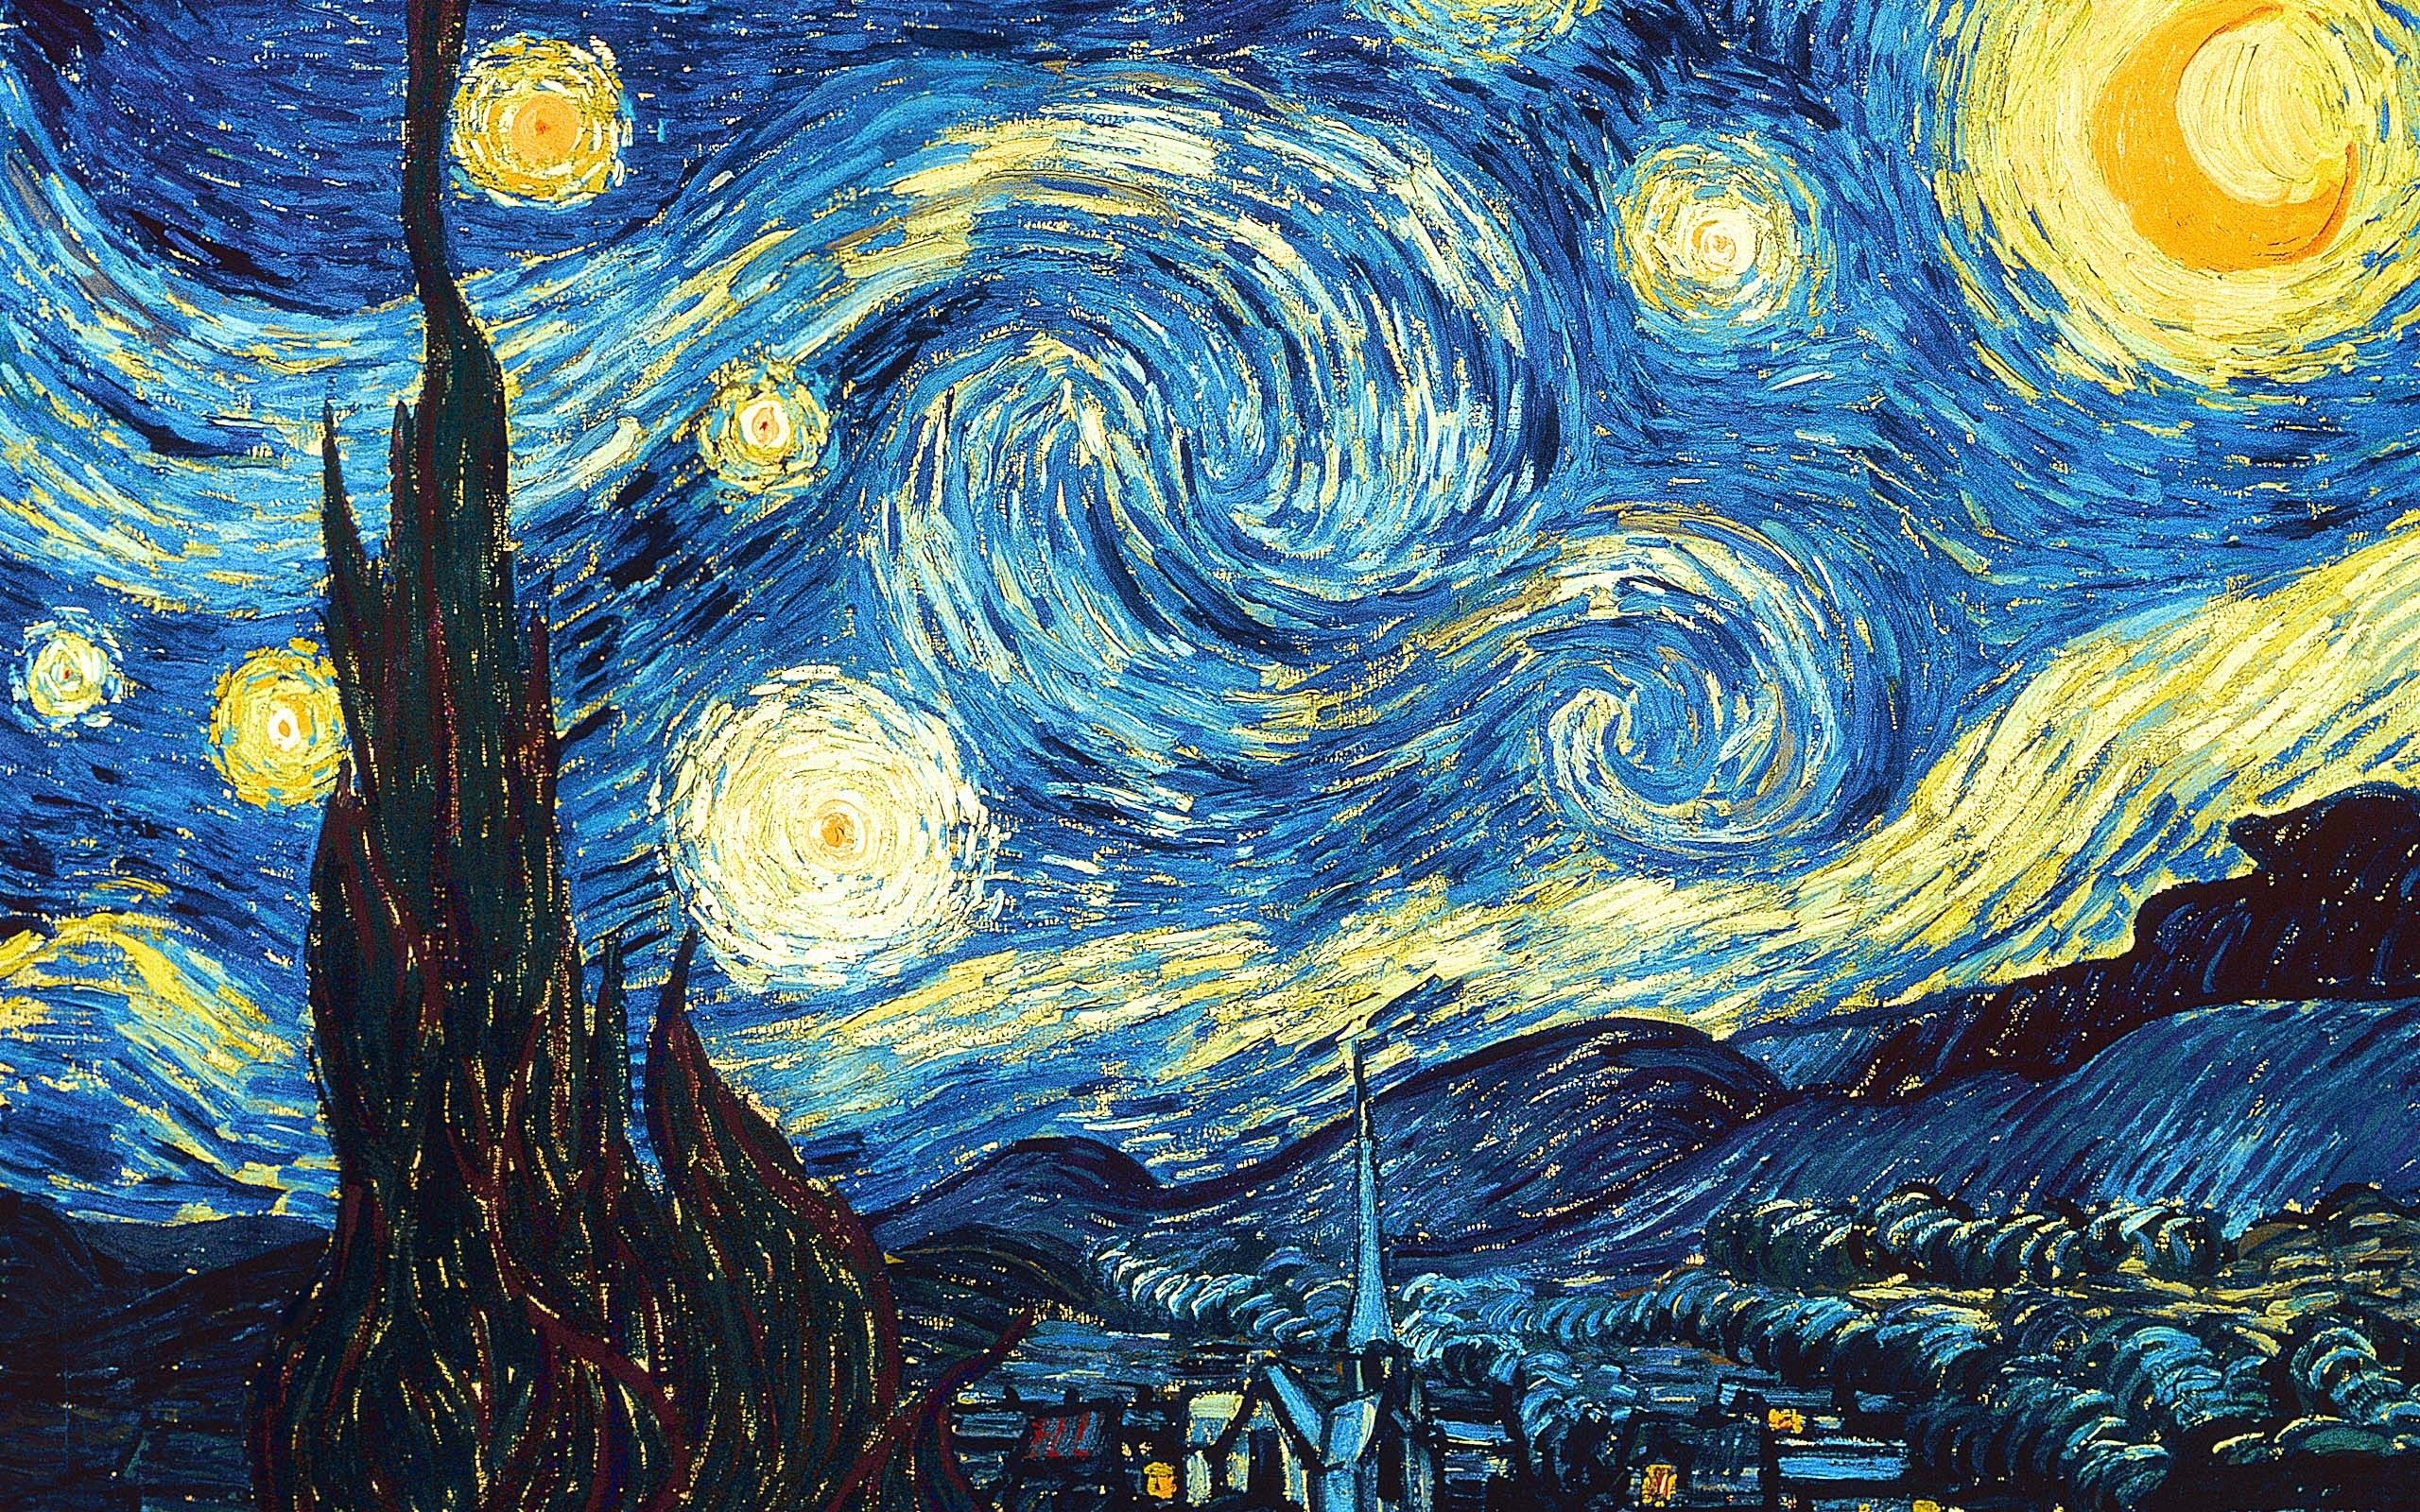 Vincent Van Gogh The Starry Night - wallpaper.